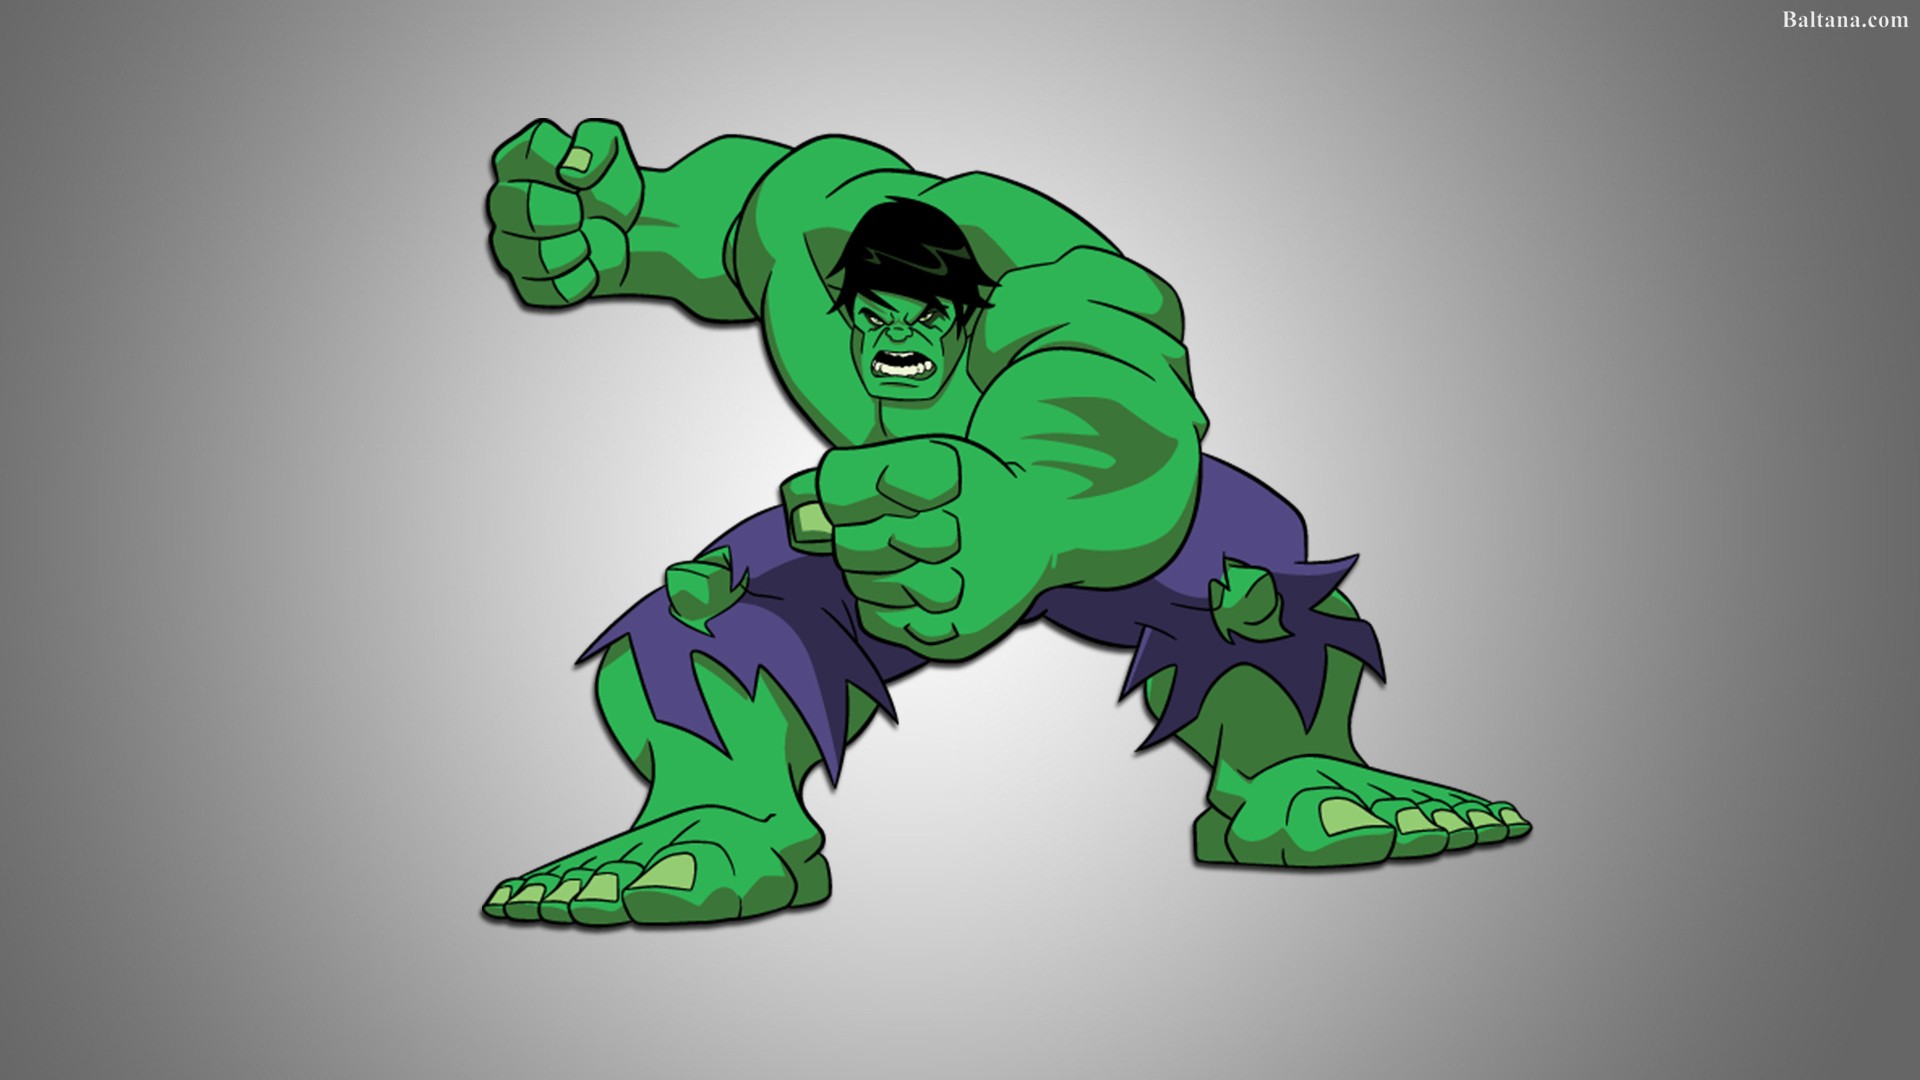 Animated Hulk Wallpaper - Hulk Animated Wallpaper Hd - 1920x1080 Wallpaper  